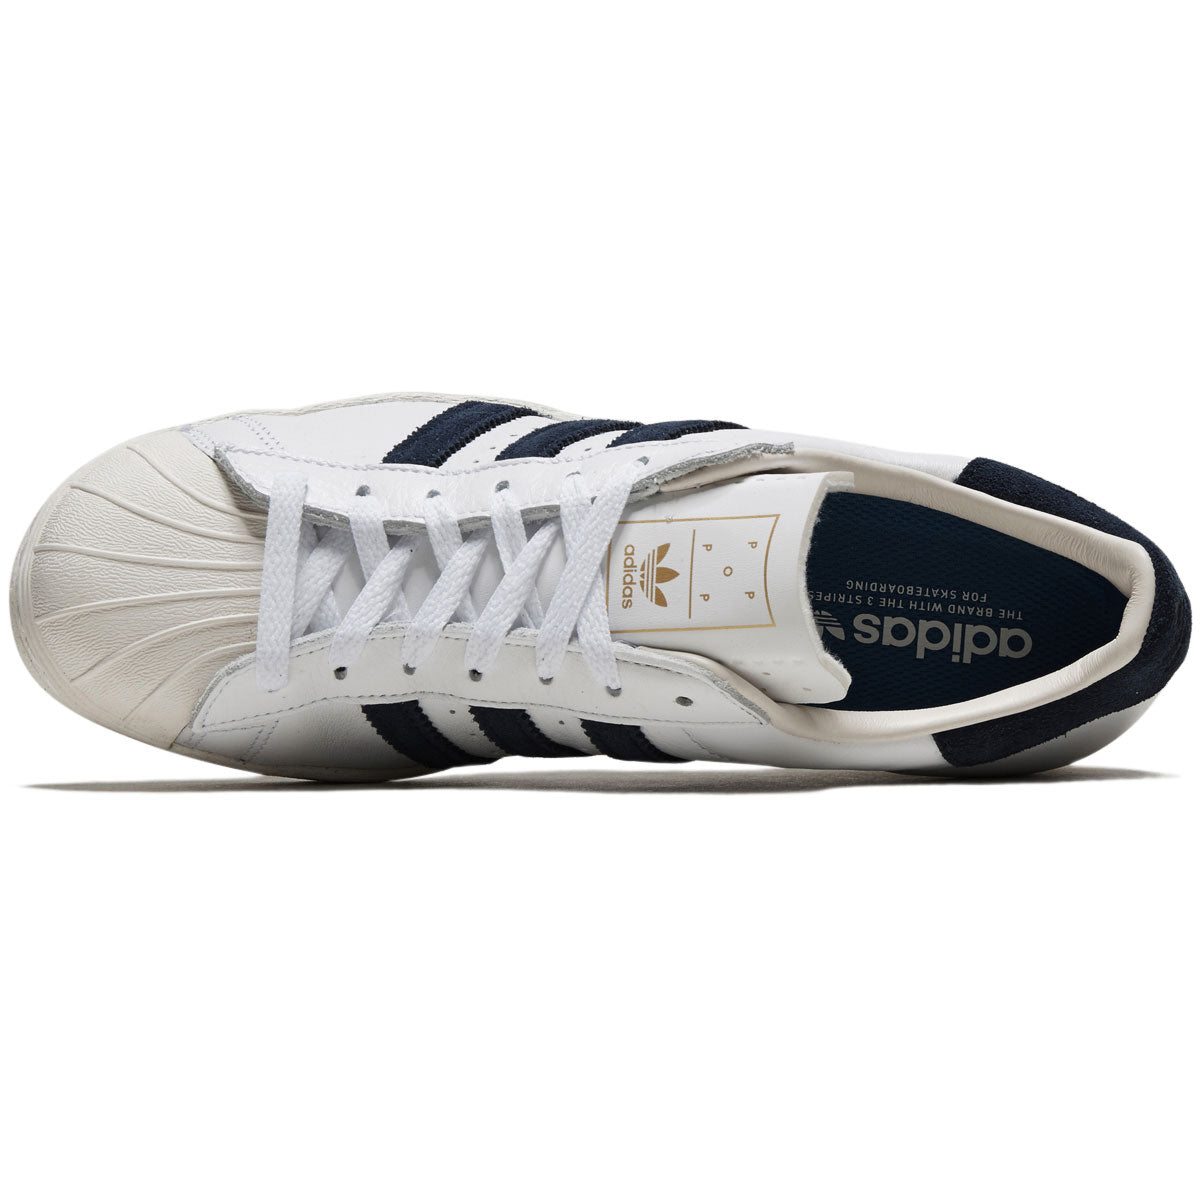 Adidas x Pop Trading Co Superstar Adv Shoes - White/Collegiate Navy/Chalk White image 3